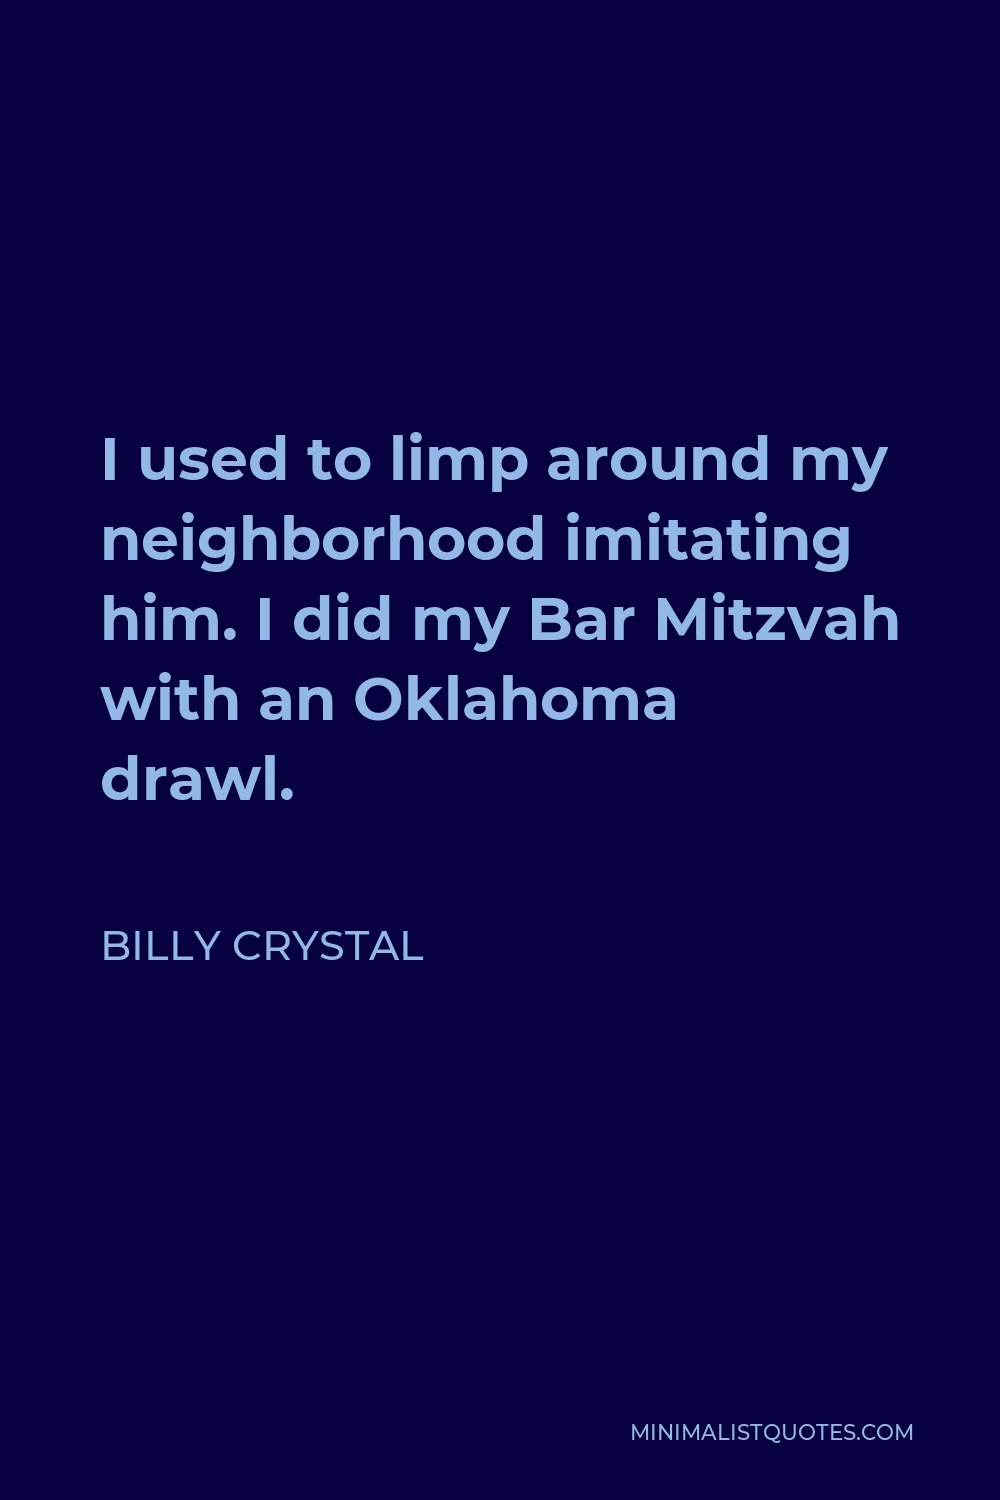 Billy Crystal Quote - I used to limp around my neighborhood imitating him. I did my Bar Mitzvah with an Oklahoma drawl.